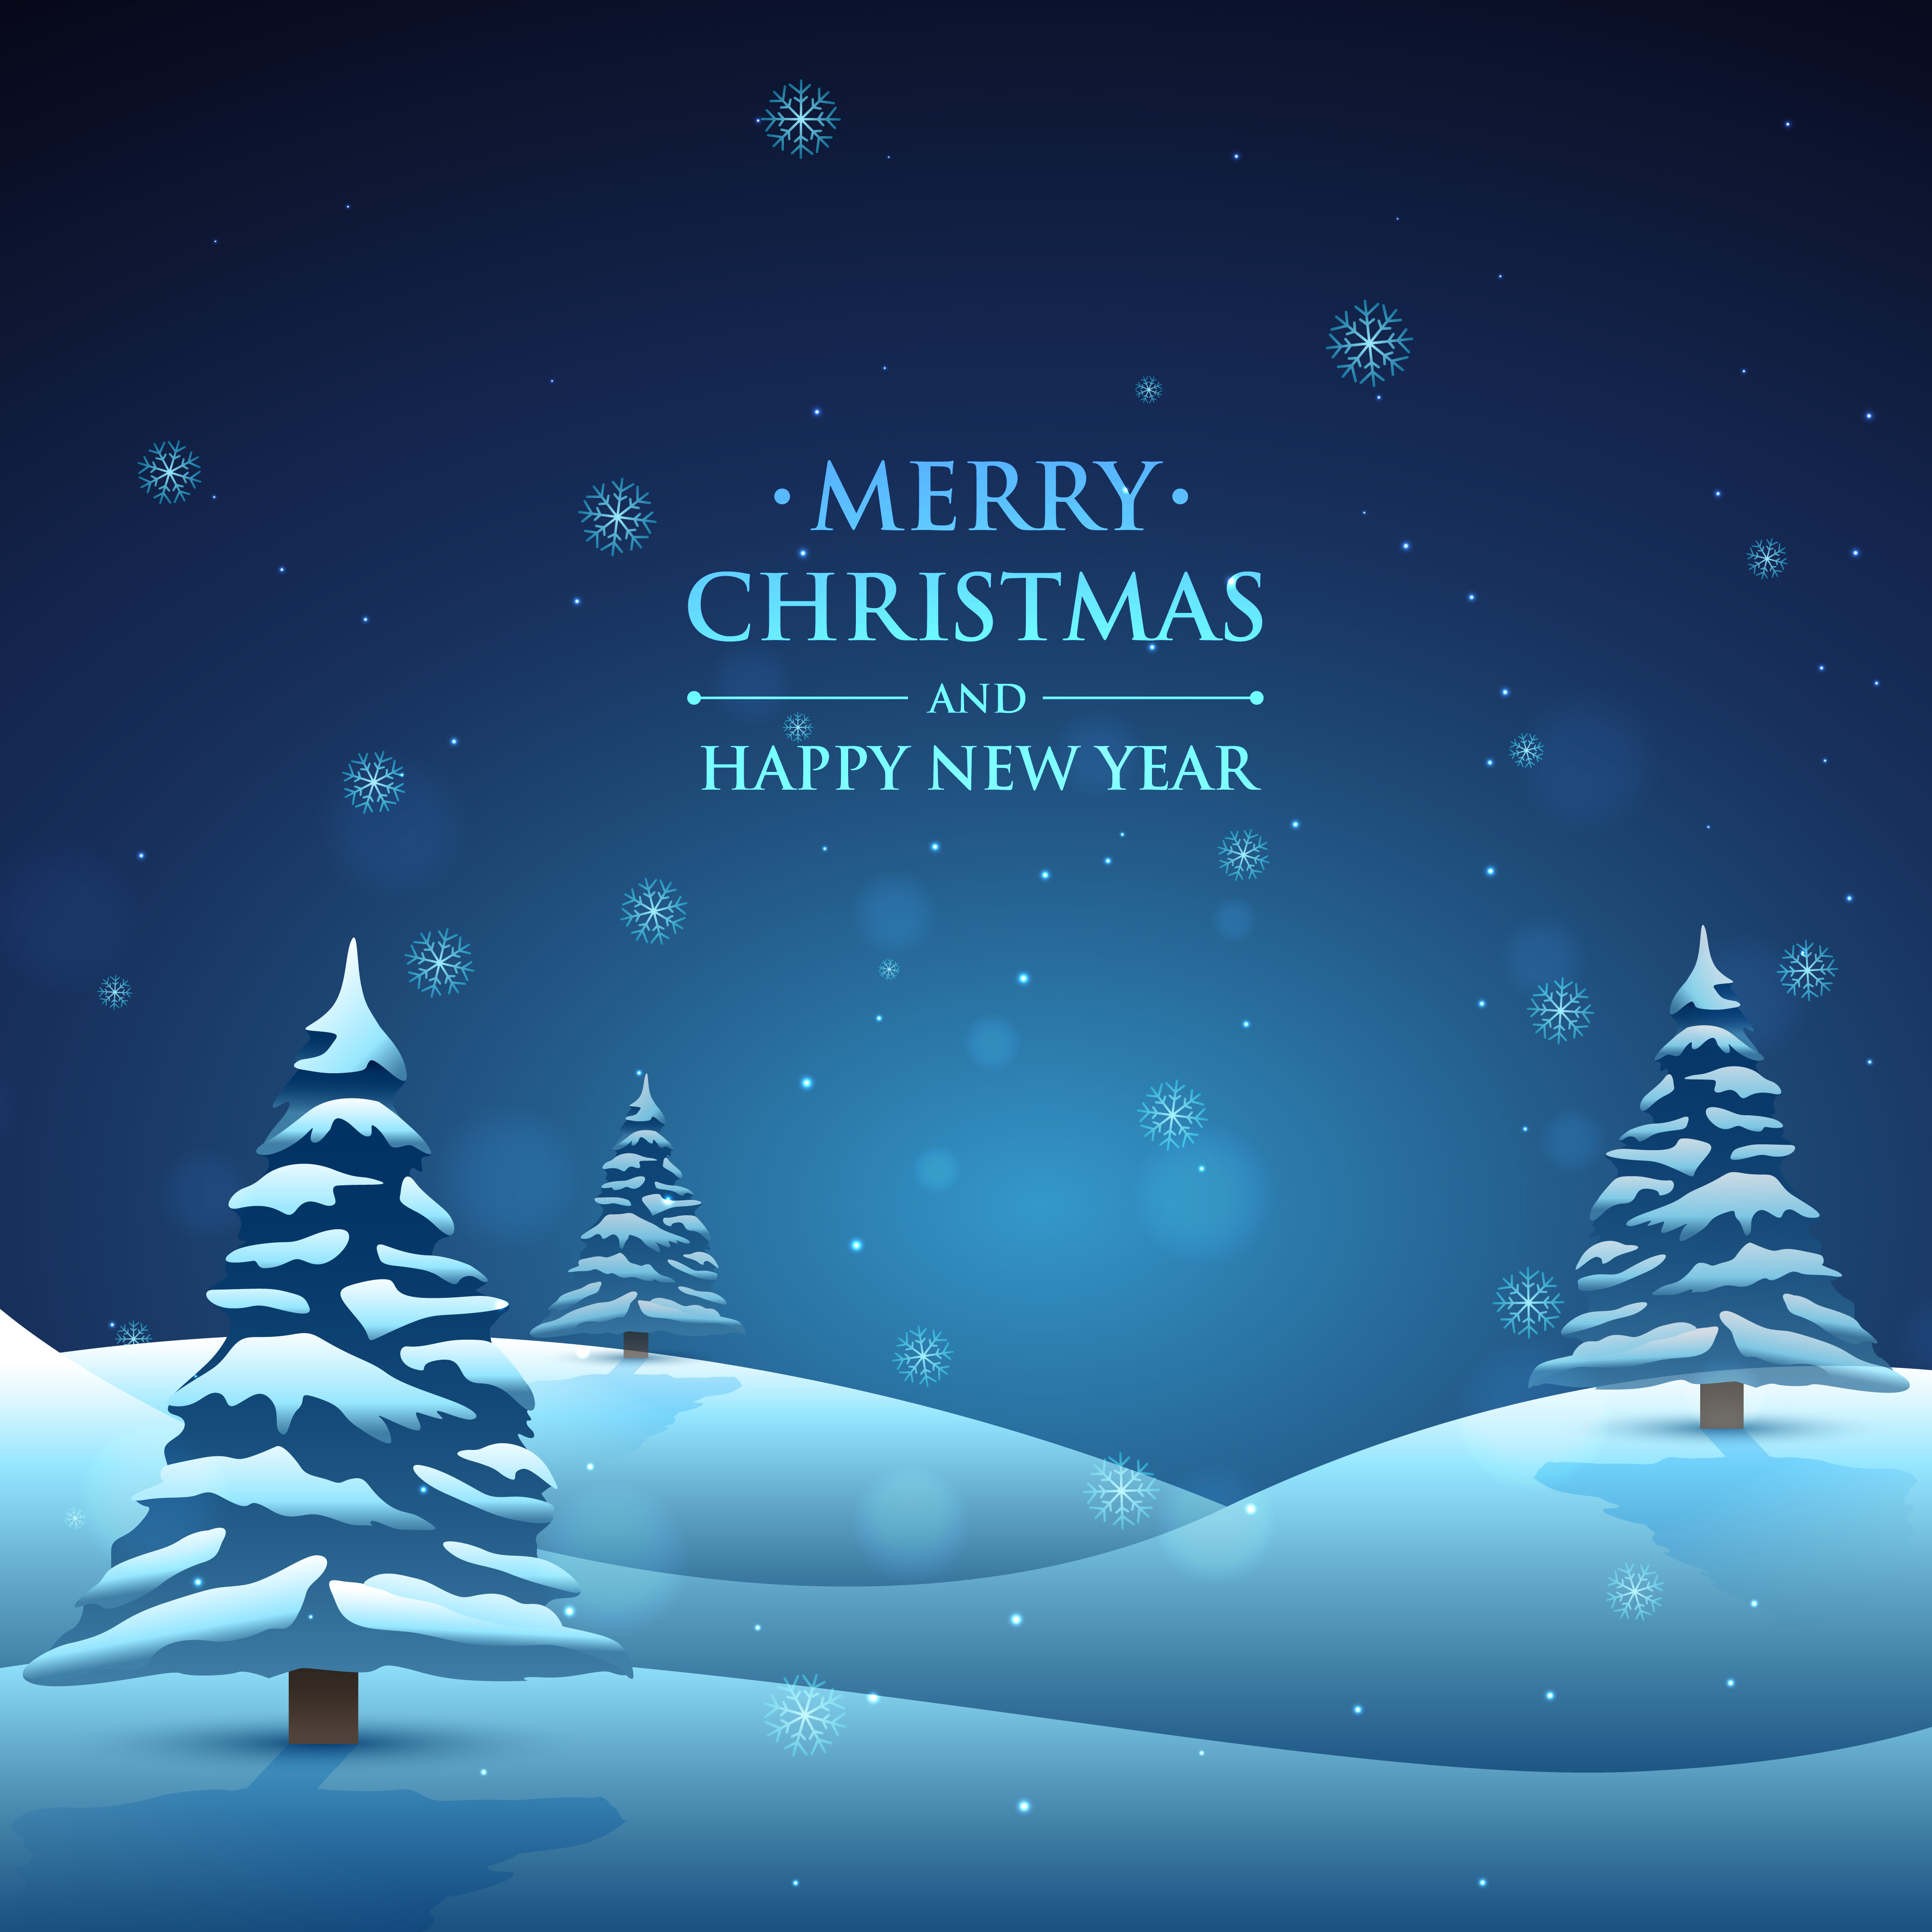 Download Christmas Scene Free Vector Art - (20102 Free Downloads)